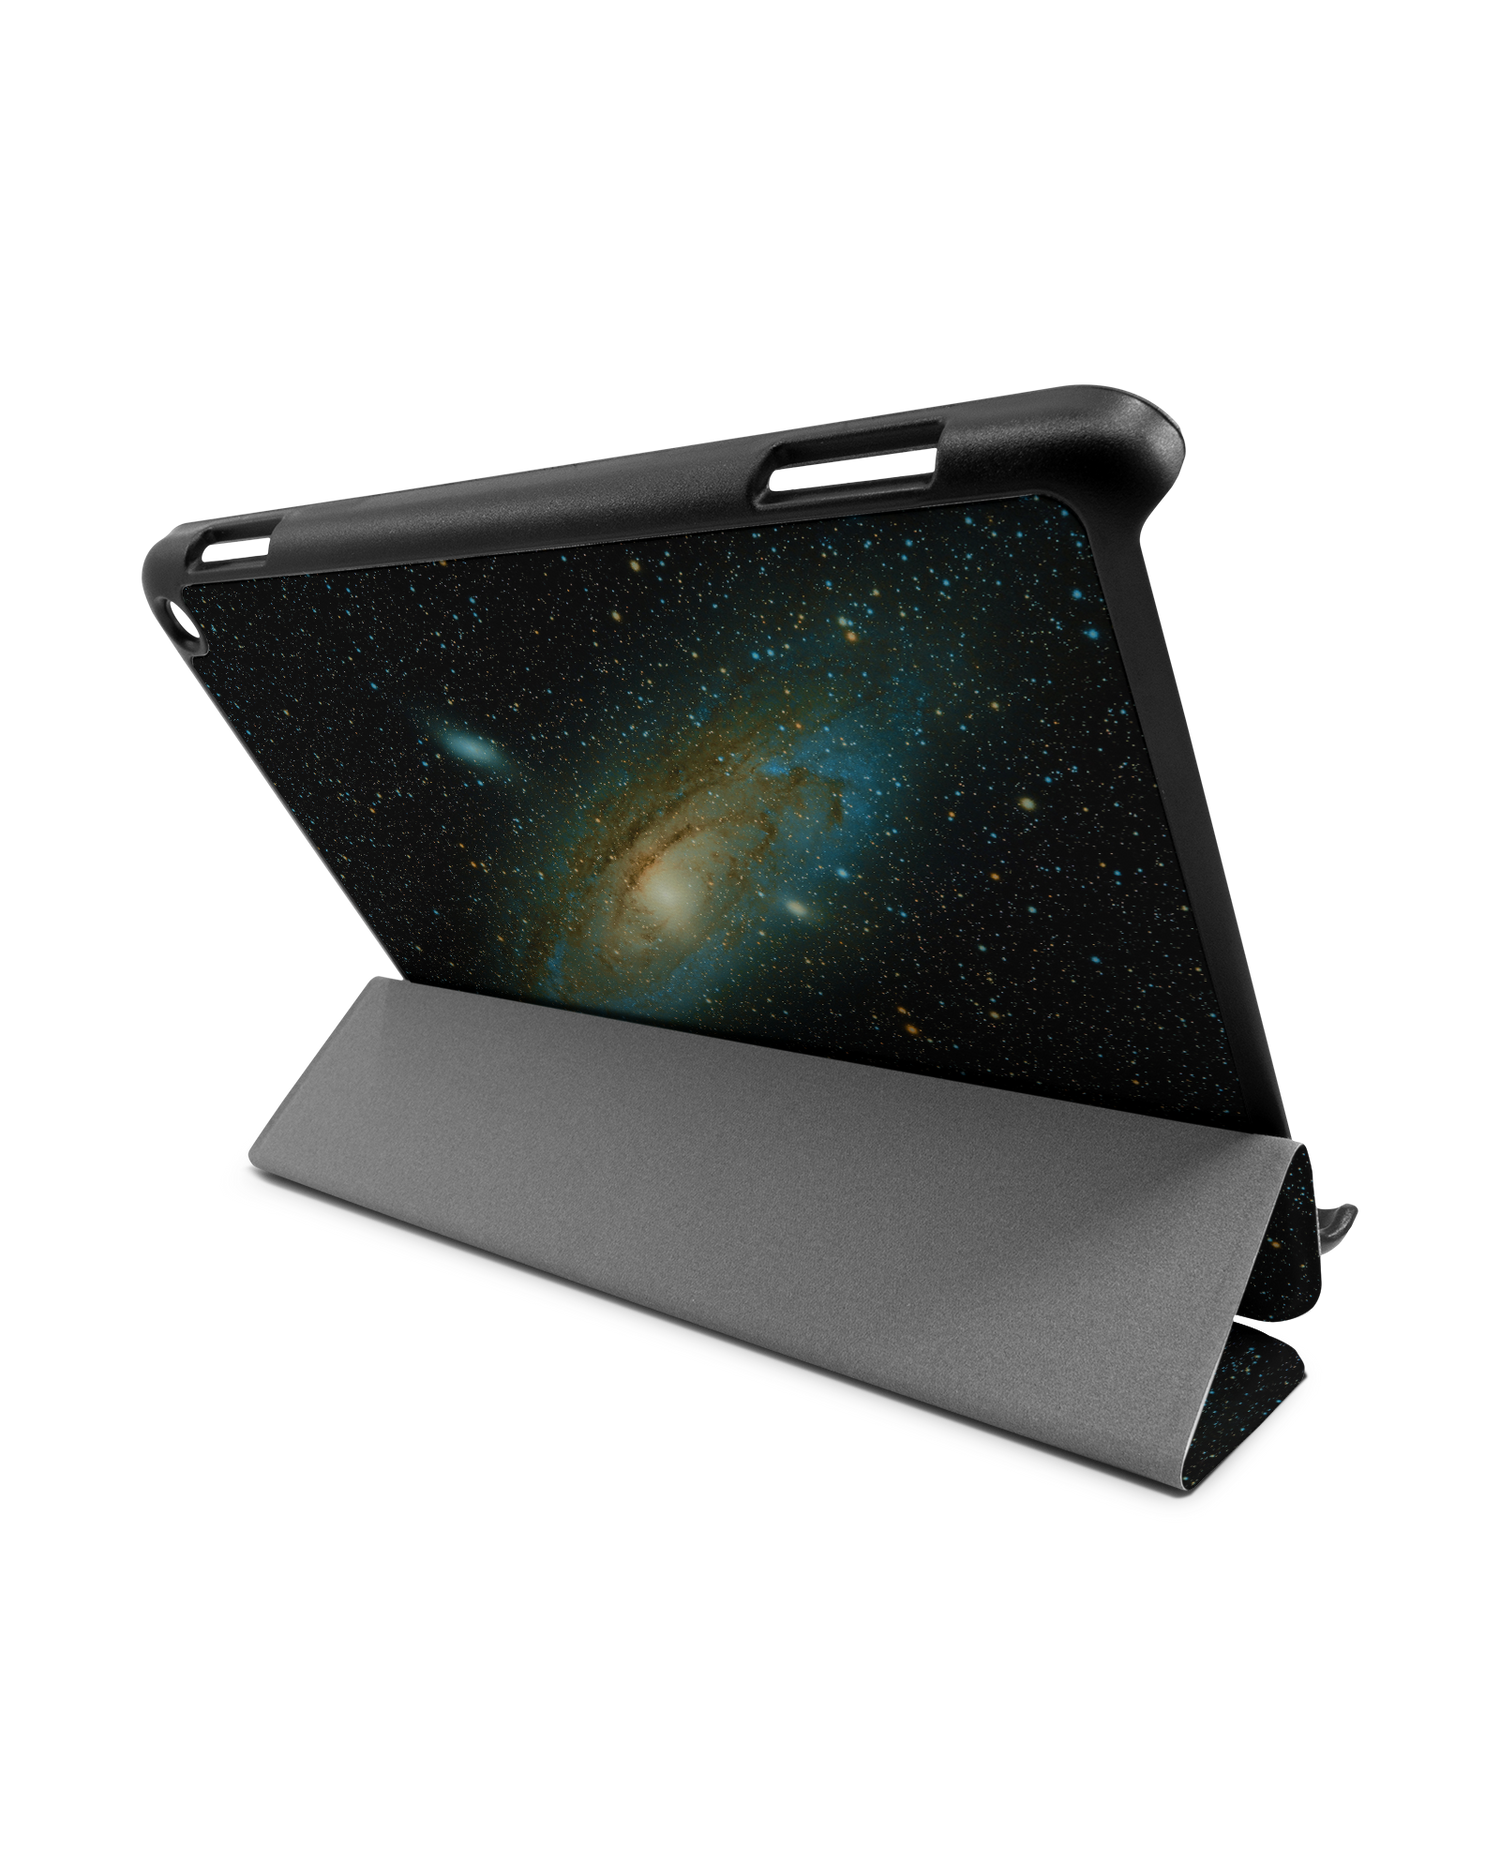 Outer Space Tablet Smart Case für Amazon Fire HD 8 (2022), Amazon Fire HD 8 Plus (2022), Amazon Fire HD 8 (2020), Amazon Fire HD 8 Plus (2020): Aufgestellt im Querformat